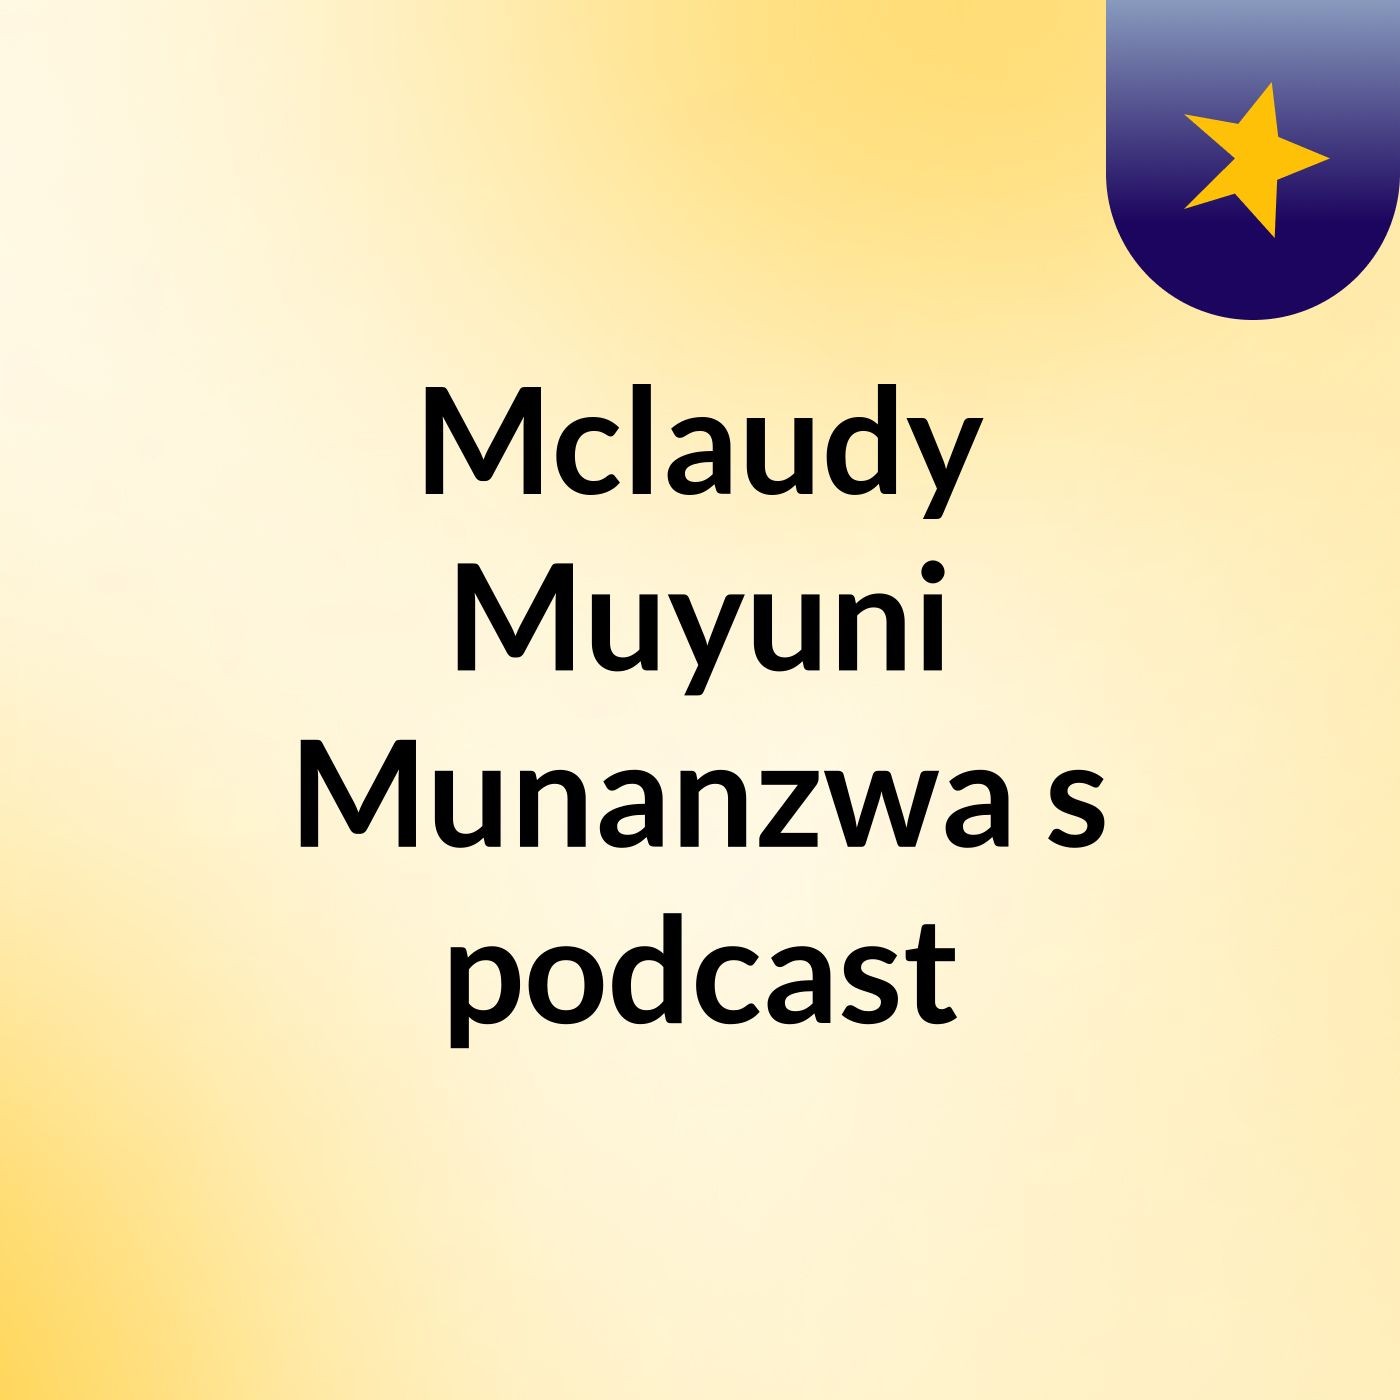 Mclaudy Muyuni Munanzwa's podcast